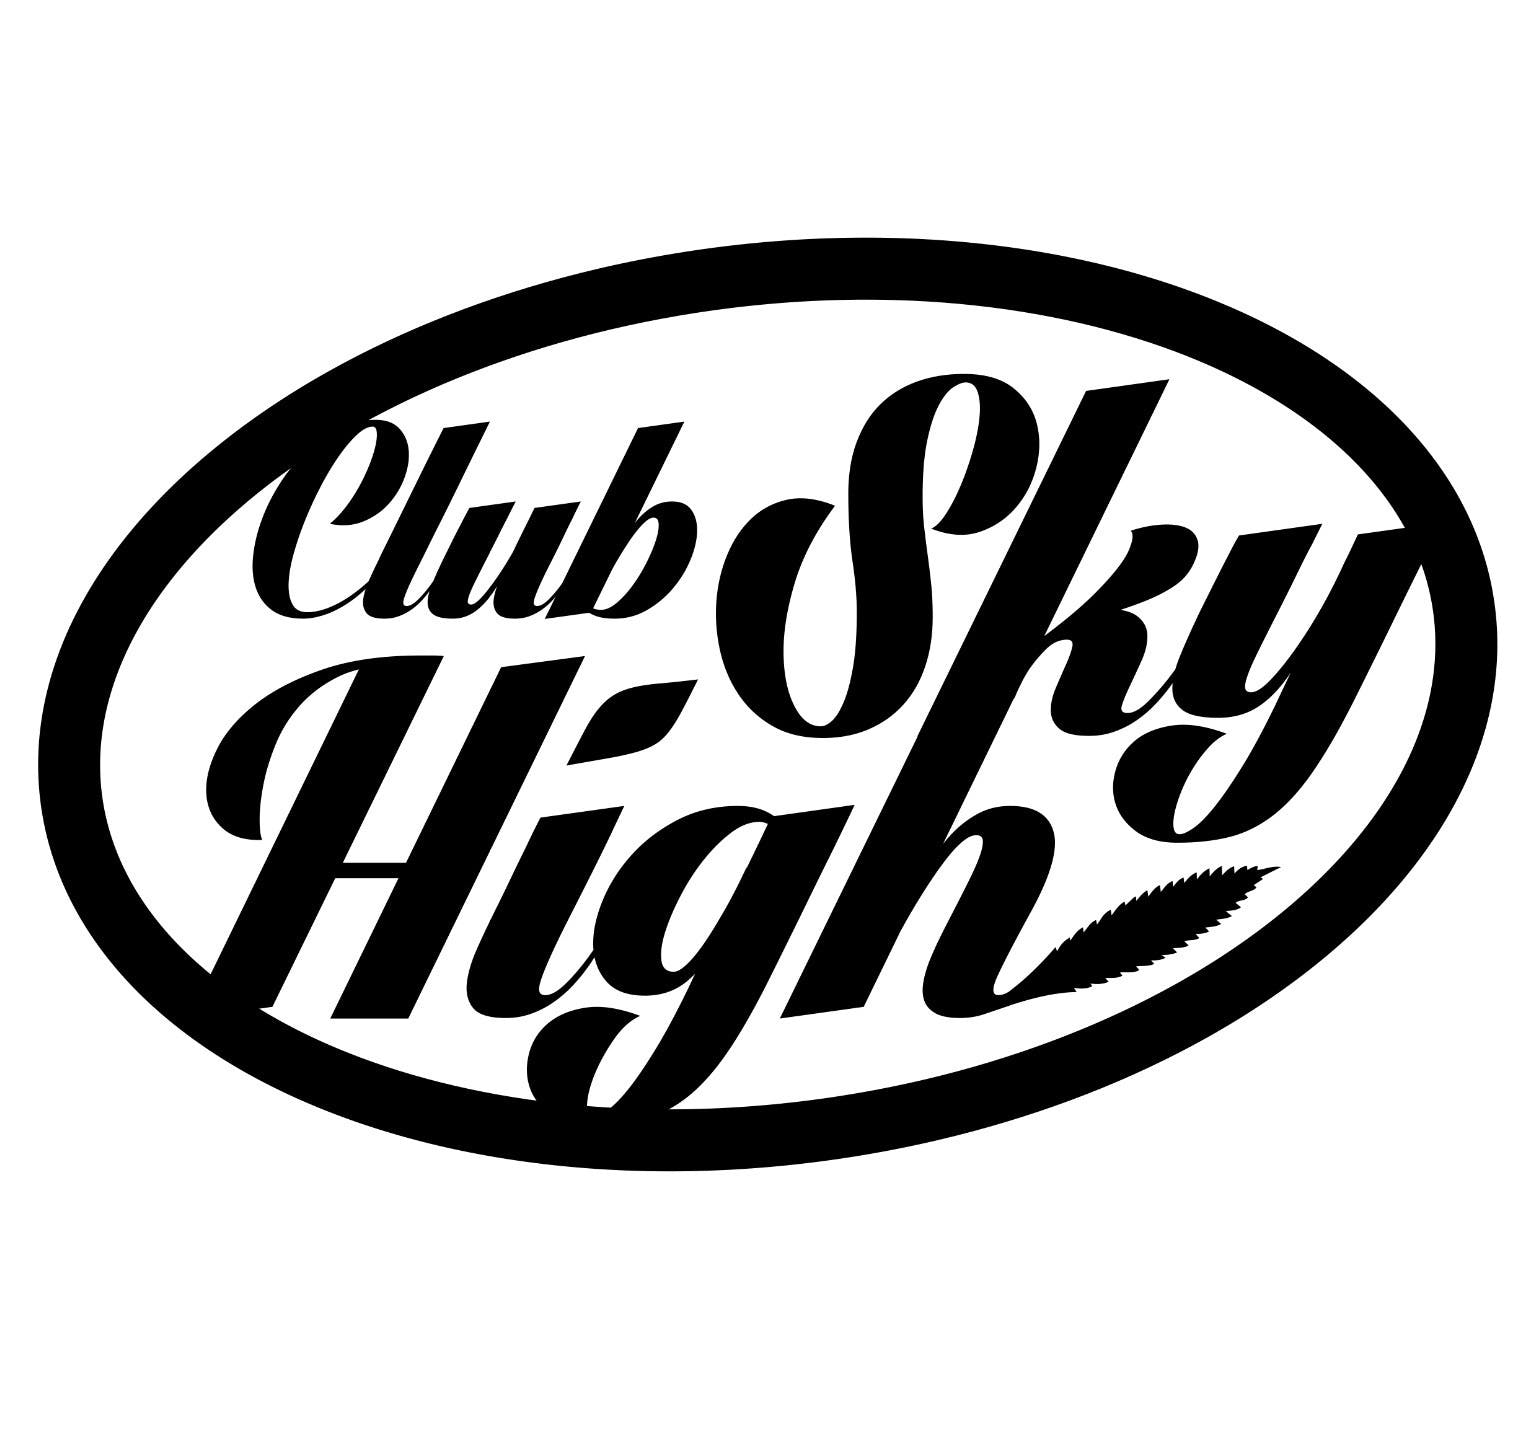 Club Sky High - Medical Marijuana Doctors - Cannabizme.com